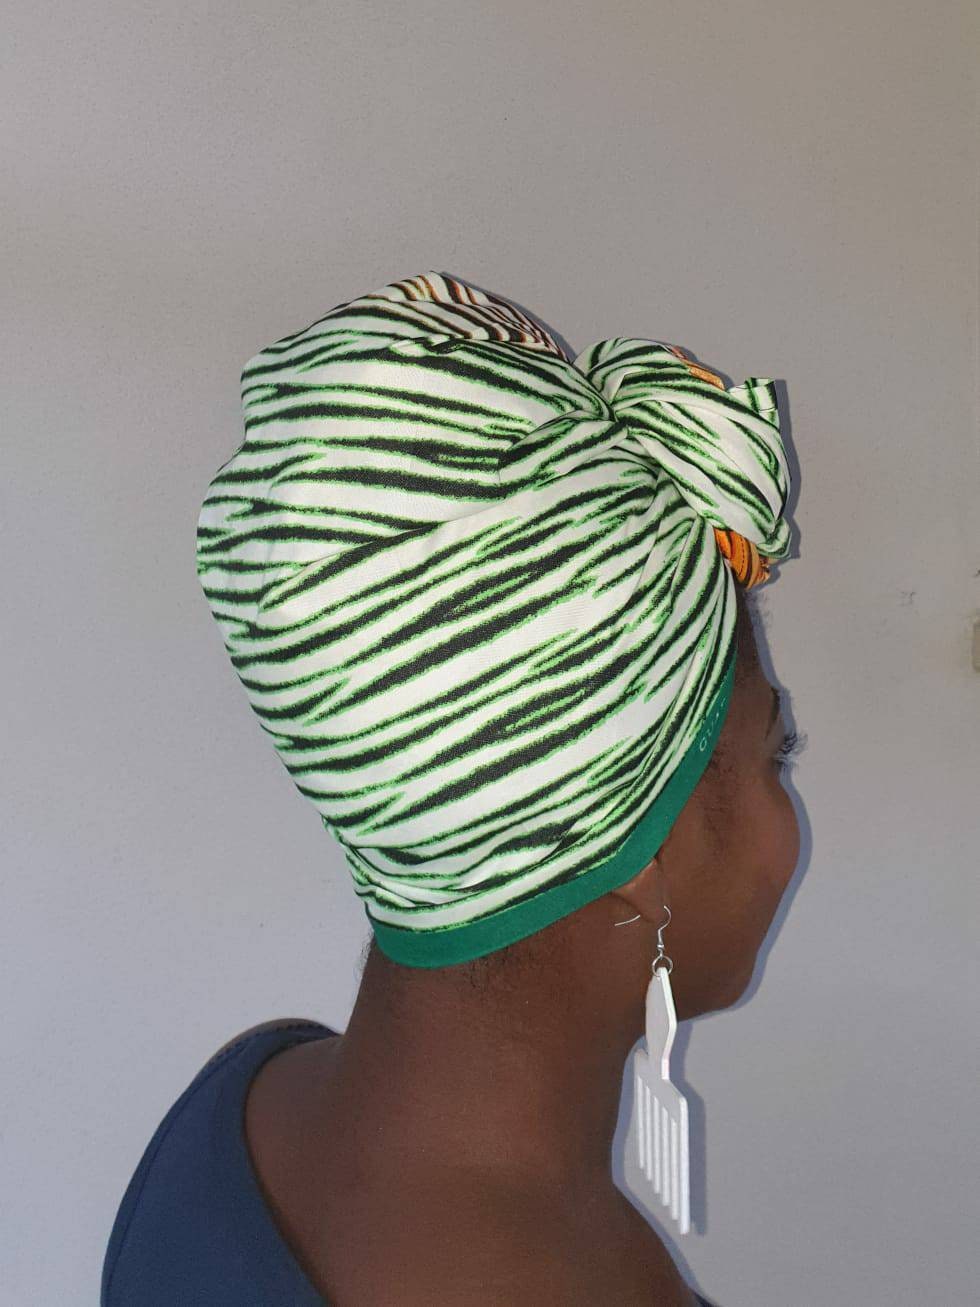 Headwrap|African Headwraps|Bandana| Headwraps| African Clothing For Women|Headscarf| Duku |100% Cotton| Ankara Print| Tie And Dye.